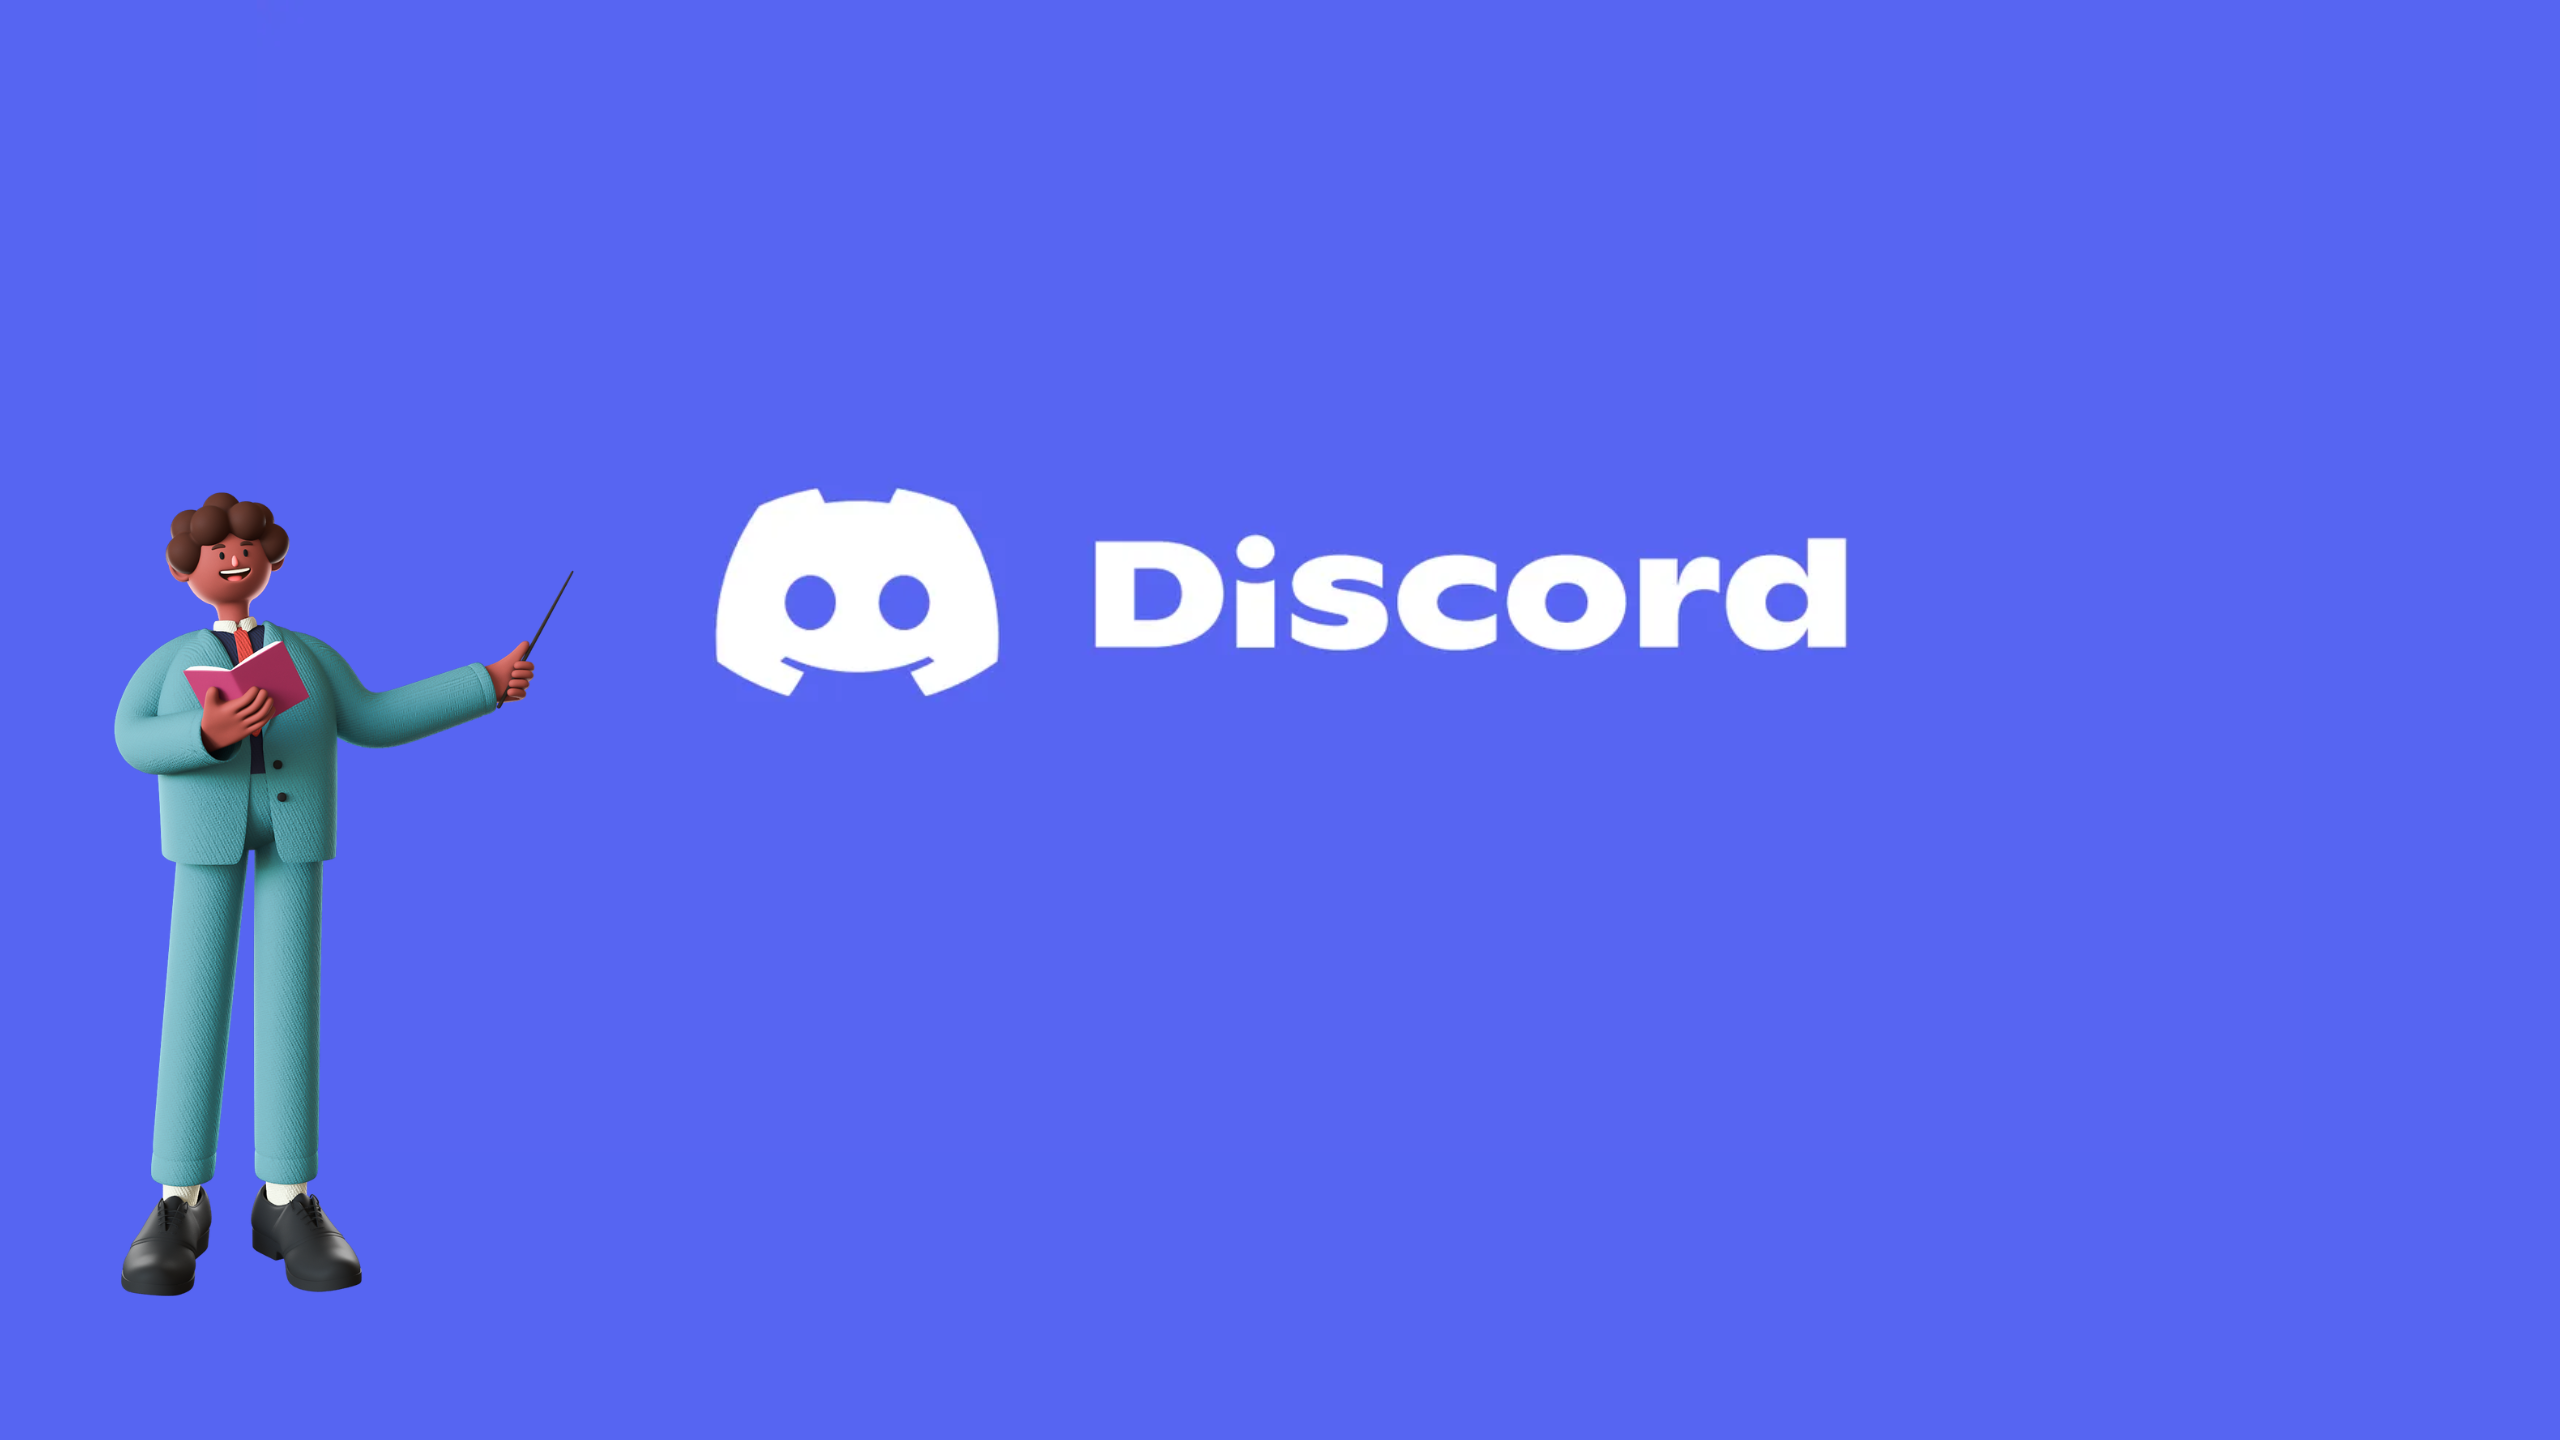 Apa Kalian Tahu Discord? Mari Simak Penjelasan Lengkapnya!